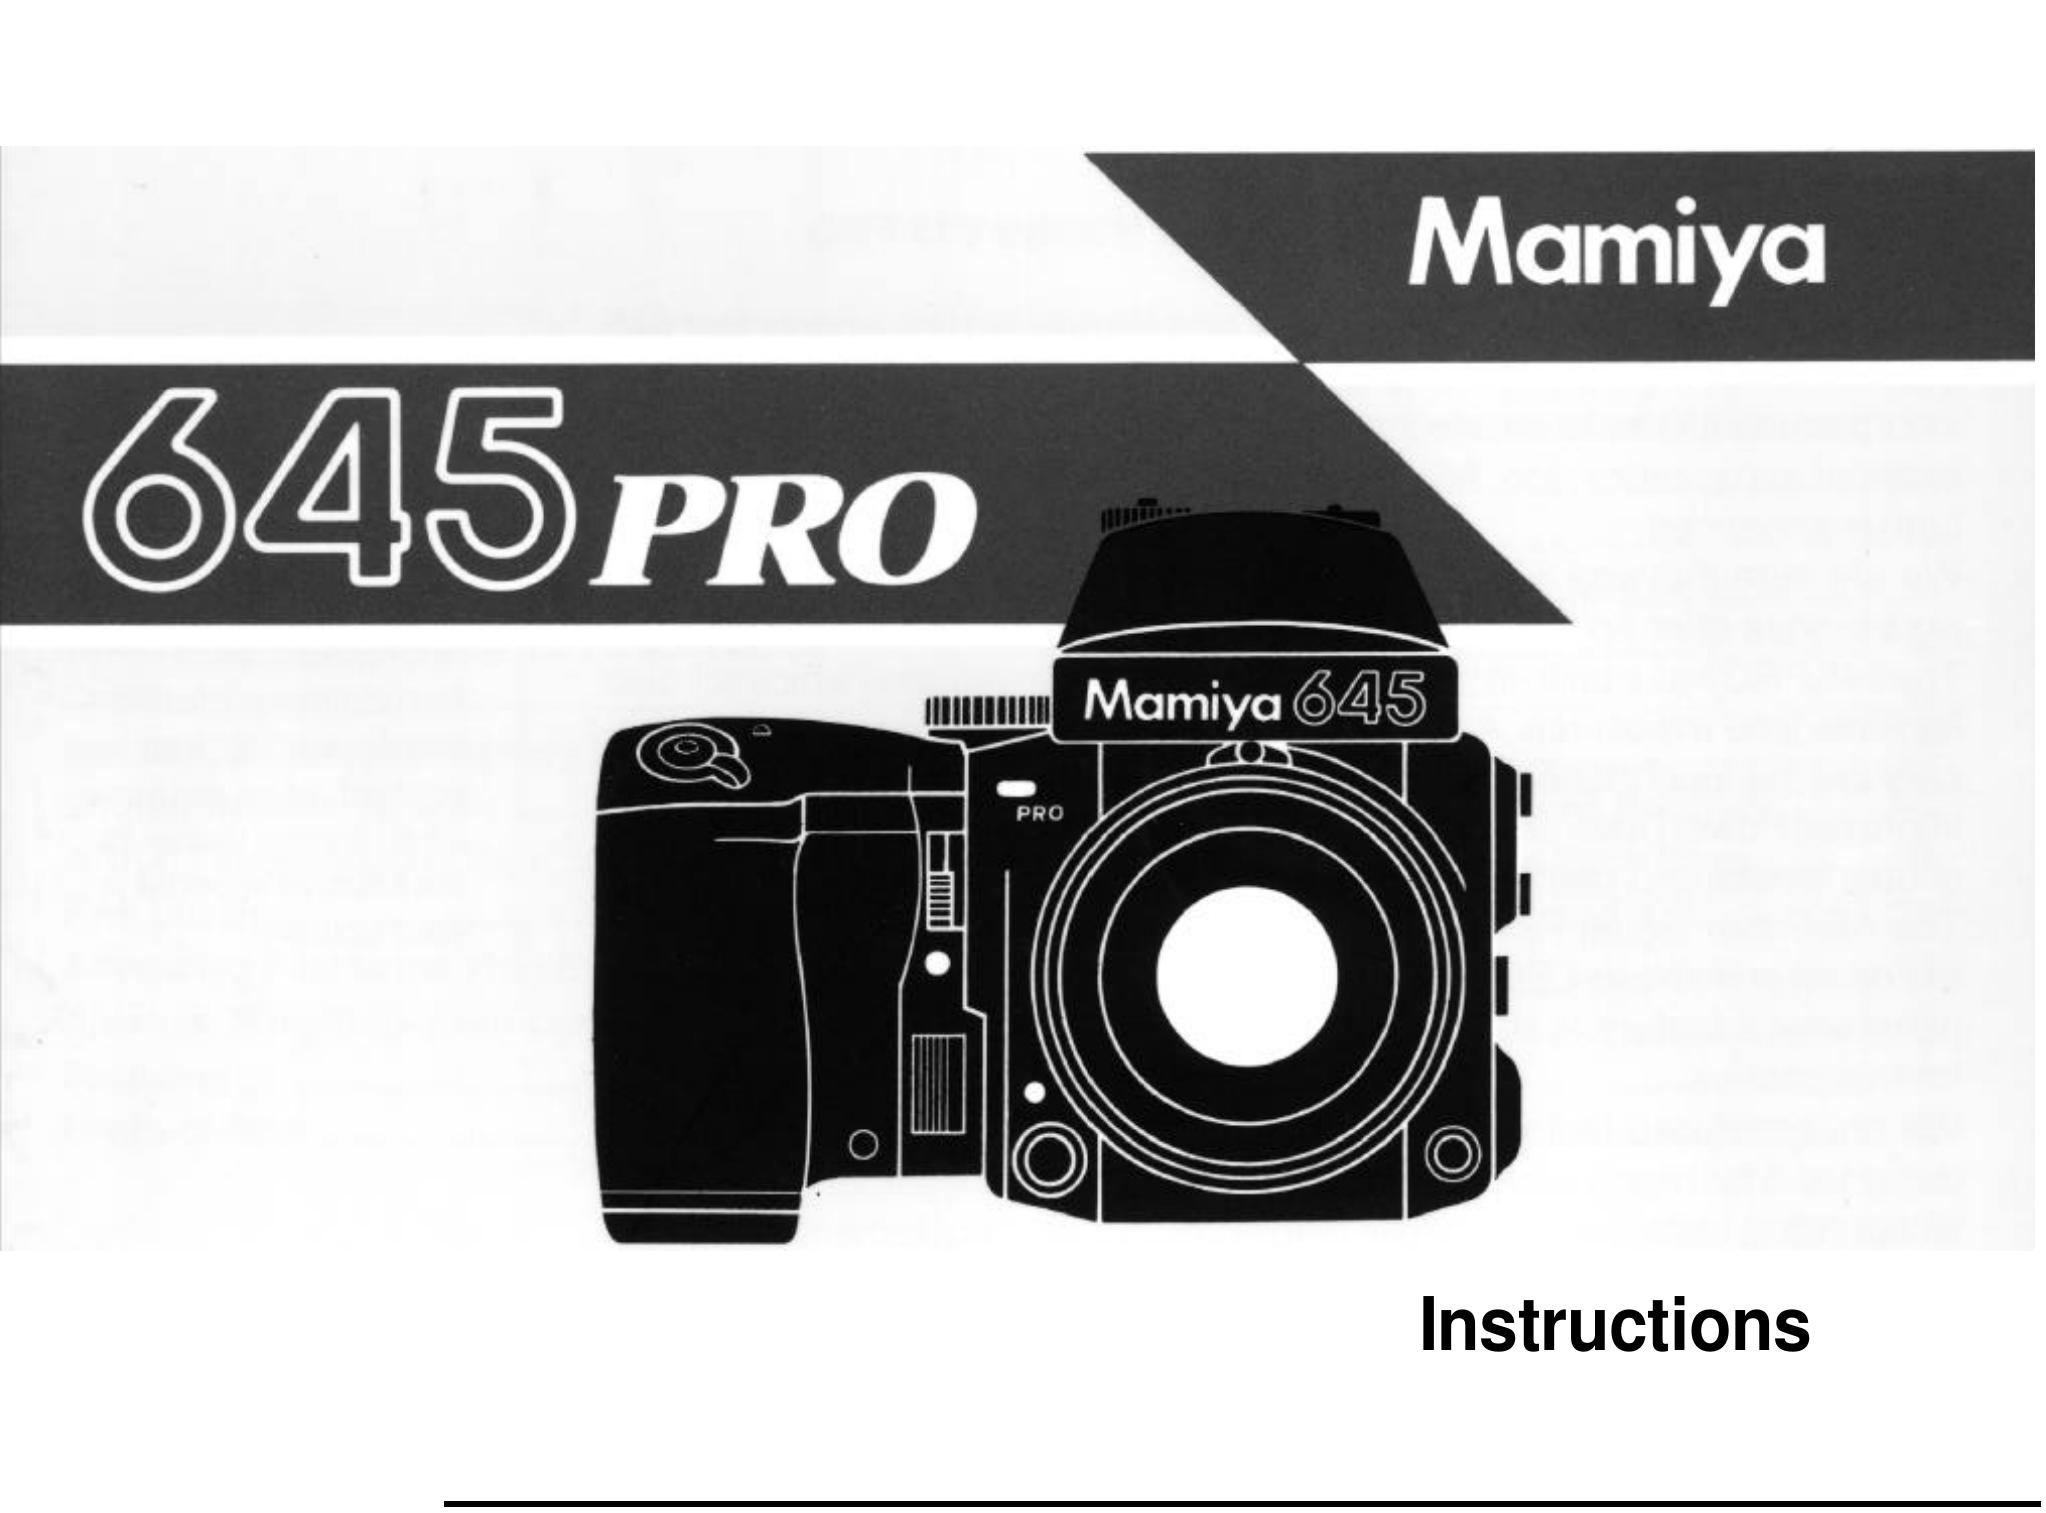 Mamiya PRO 645 Digital Camera User Manual